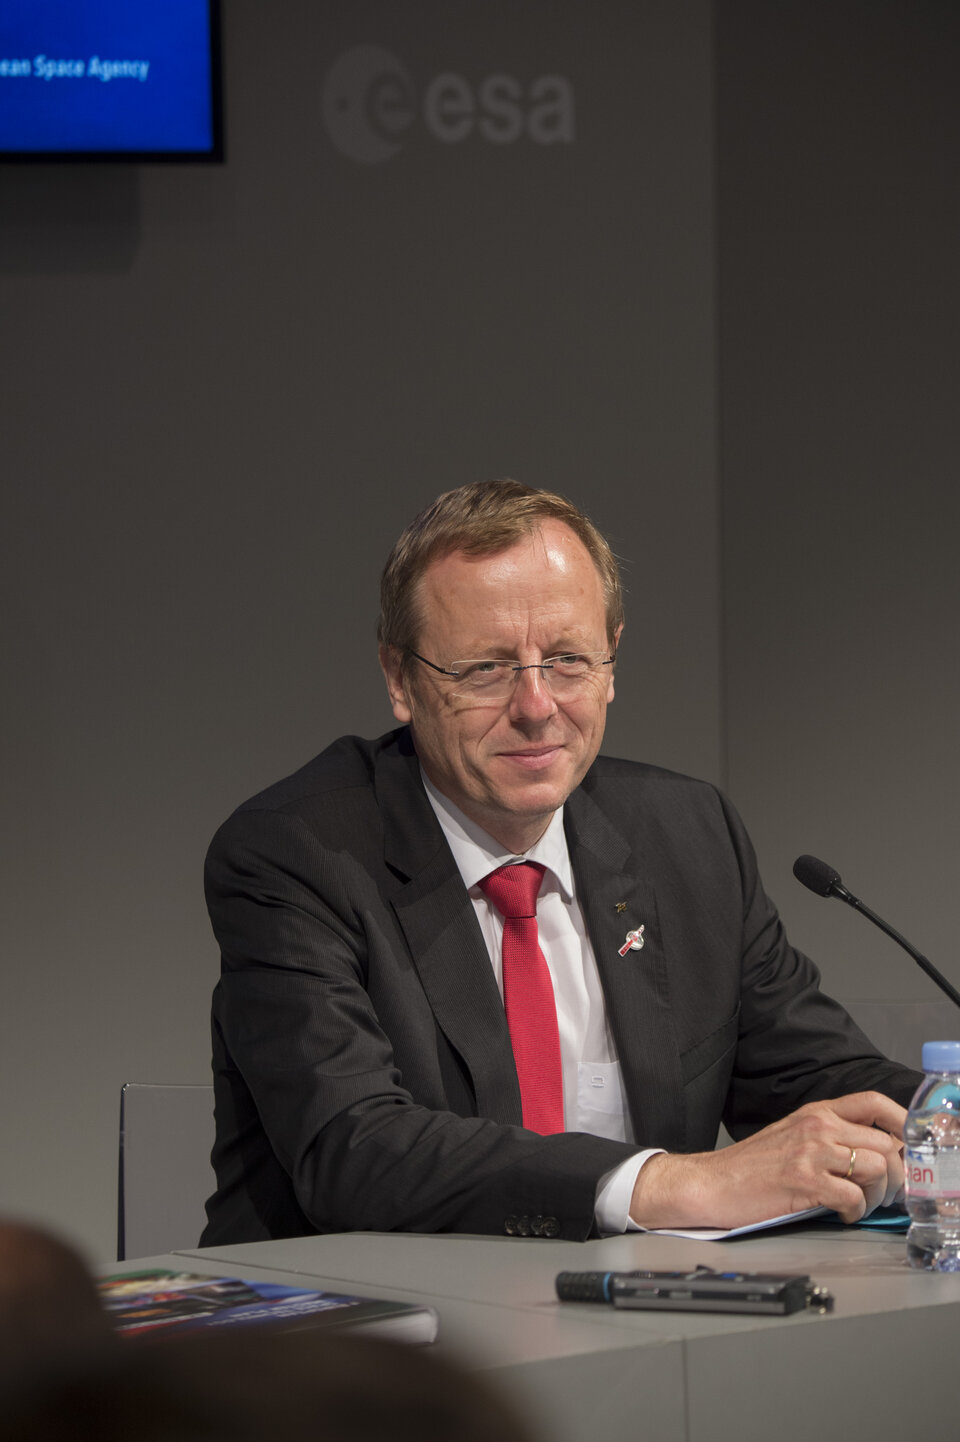 Prof. J-D. Woerner, ESA’s Director General